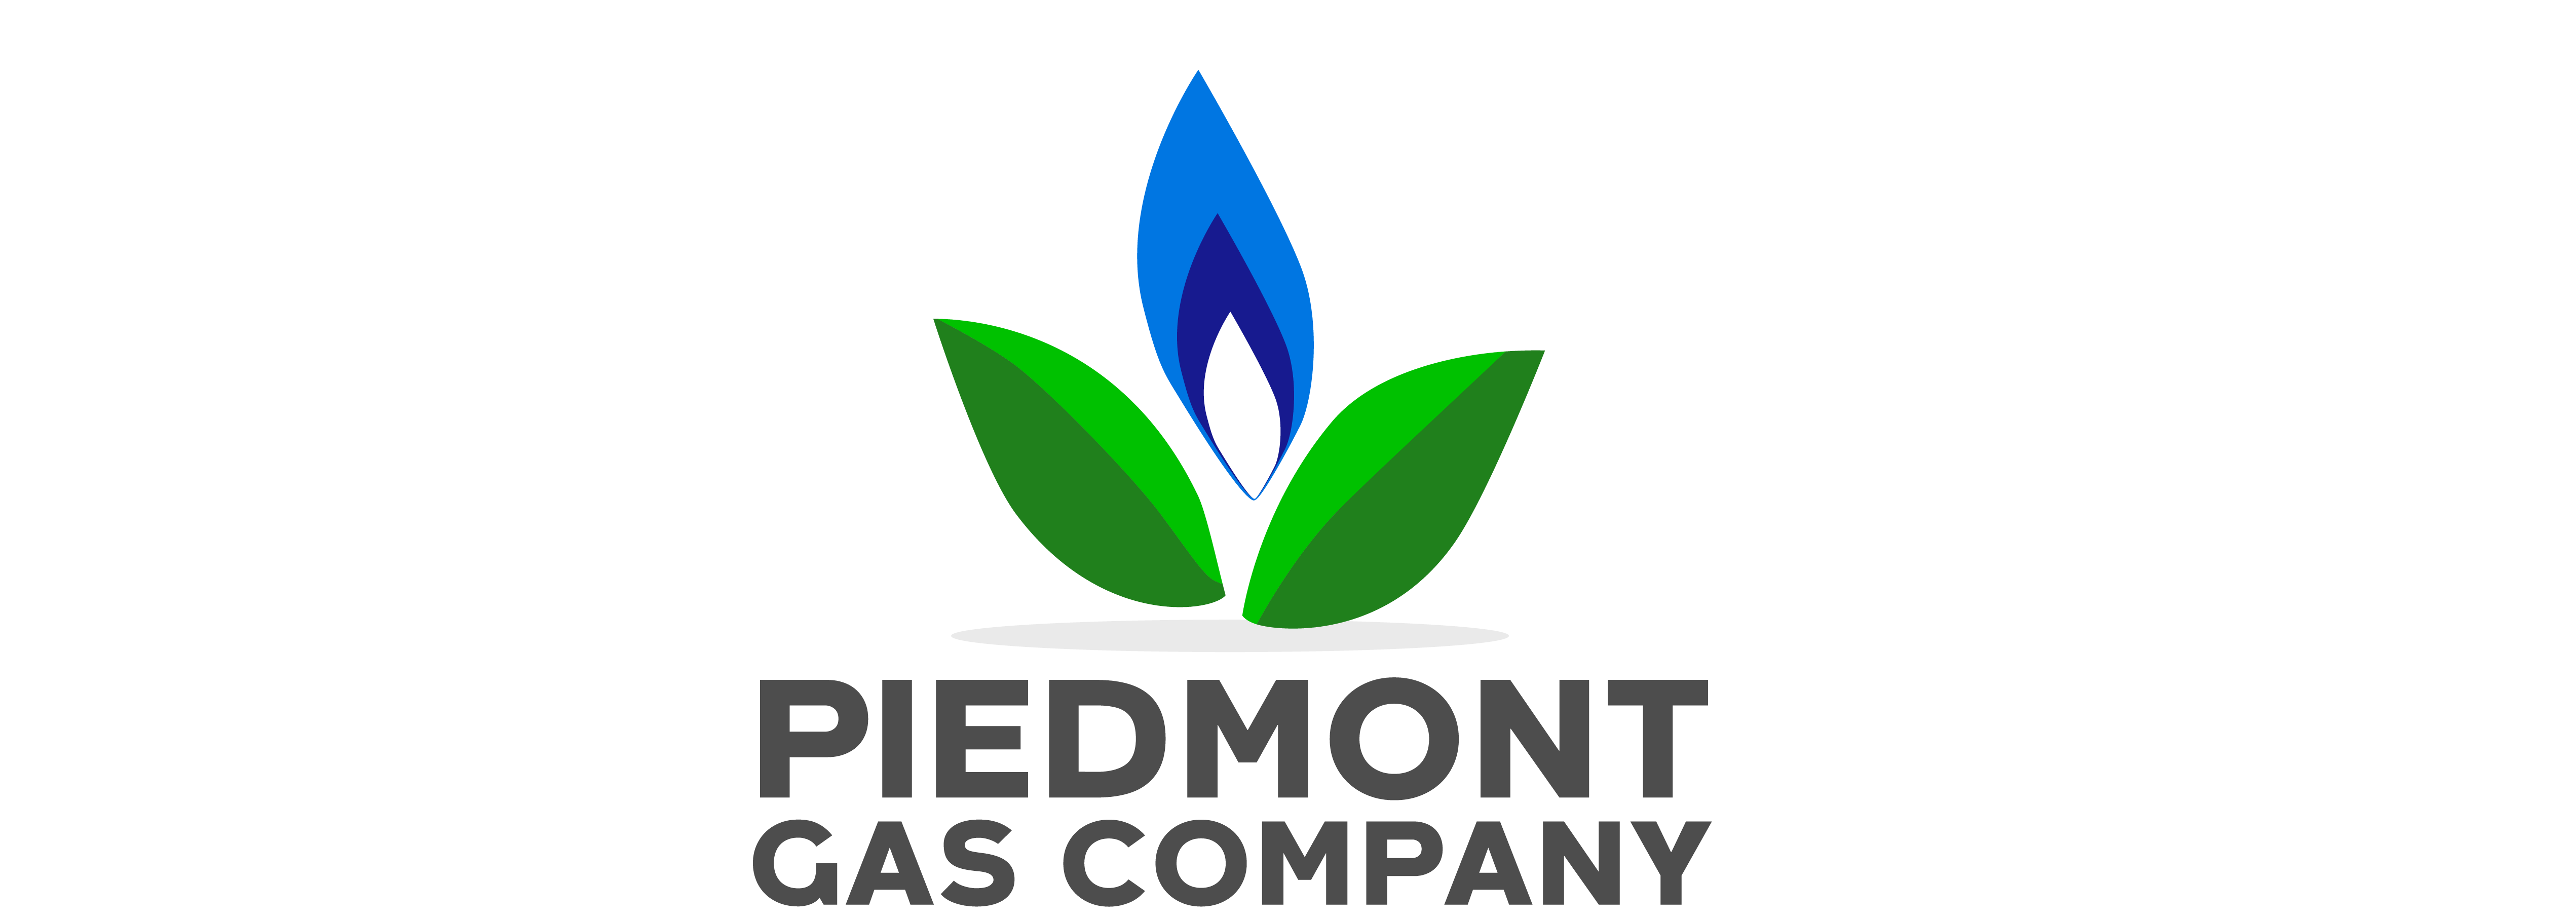 Piedmont Gas Company